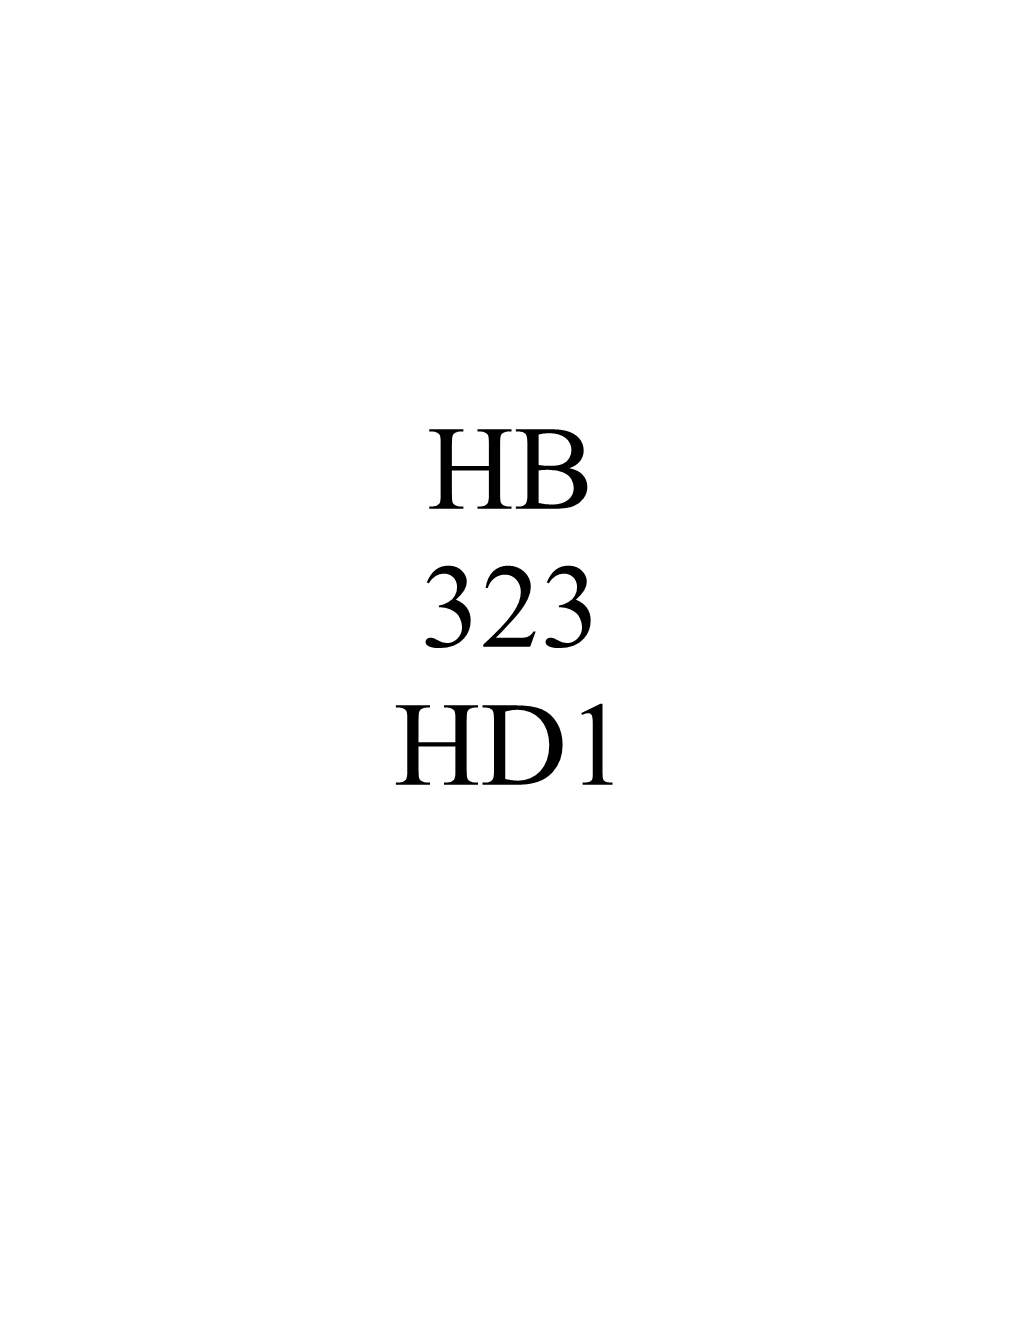 Hb323 Hd1 Testimony Cpc 02-20-19